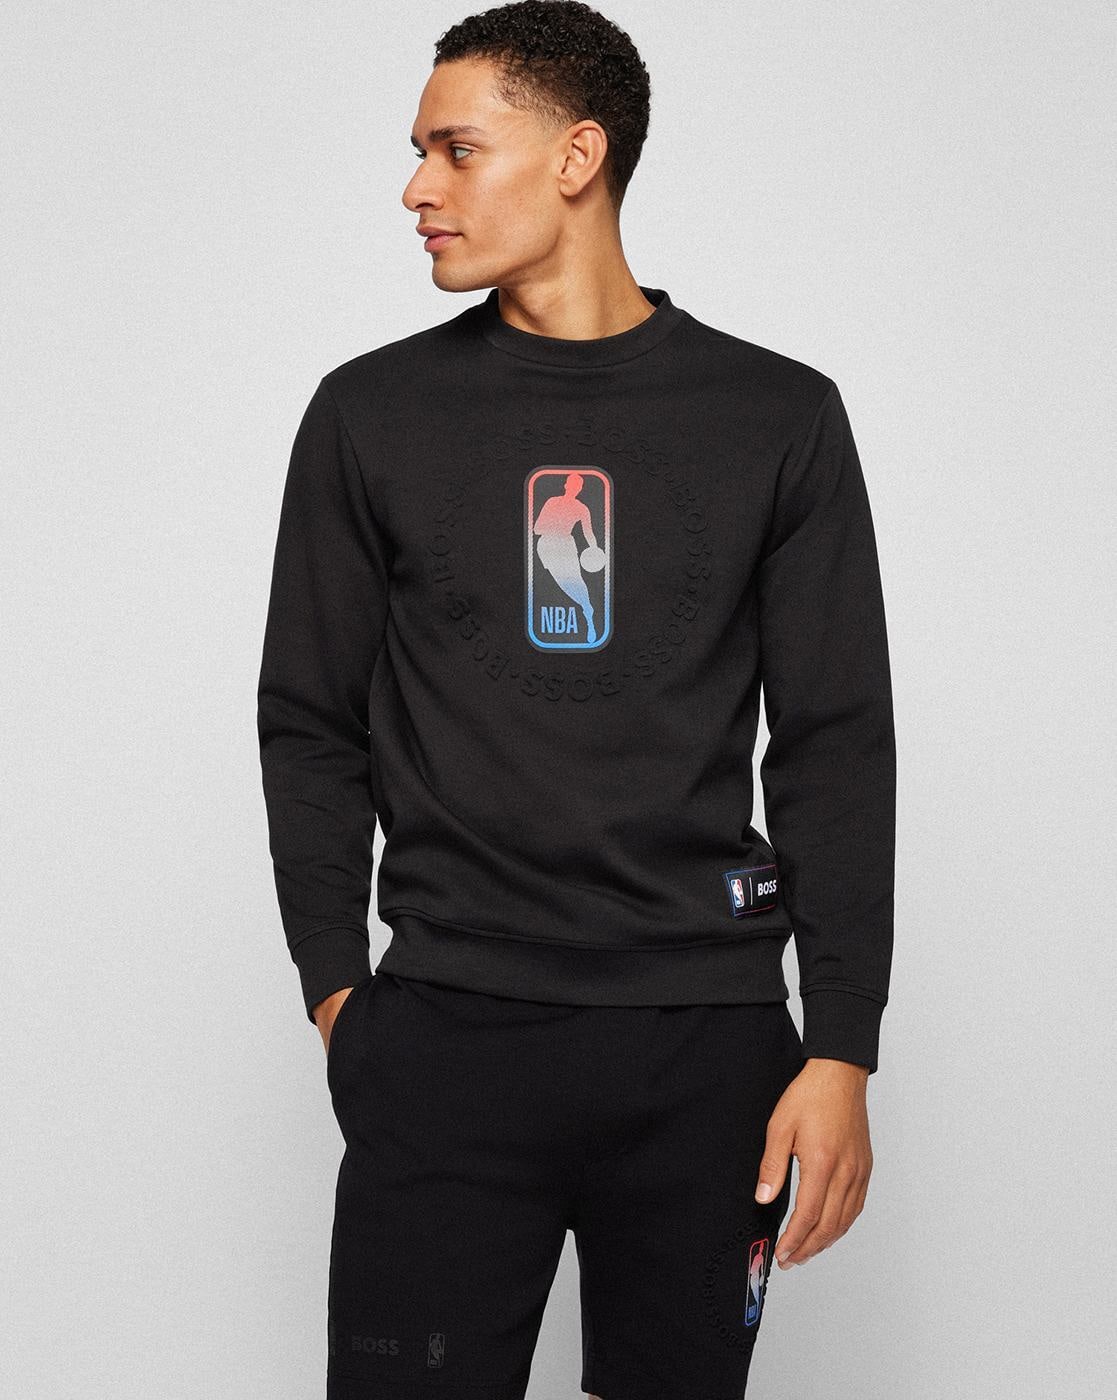 BOSS - BOSS & NBA stretch-fleece zip-neck sweatshirt